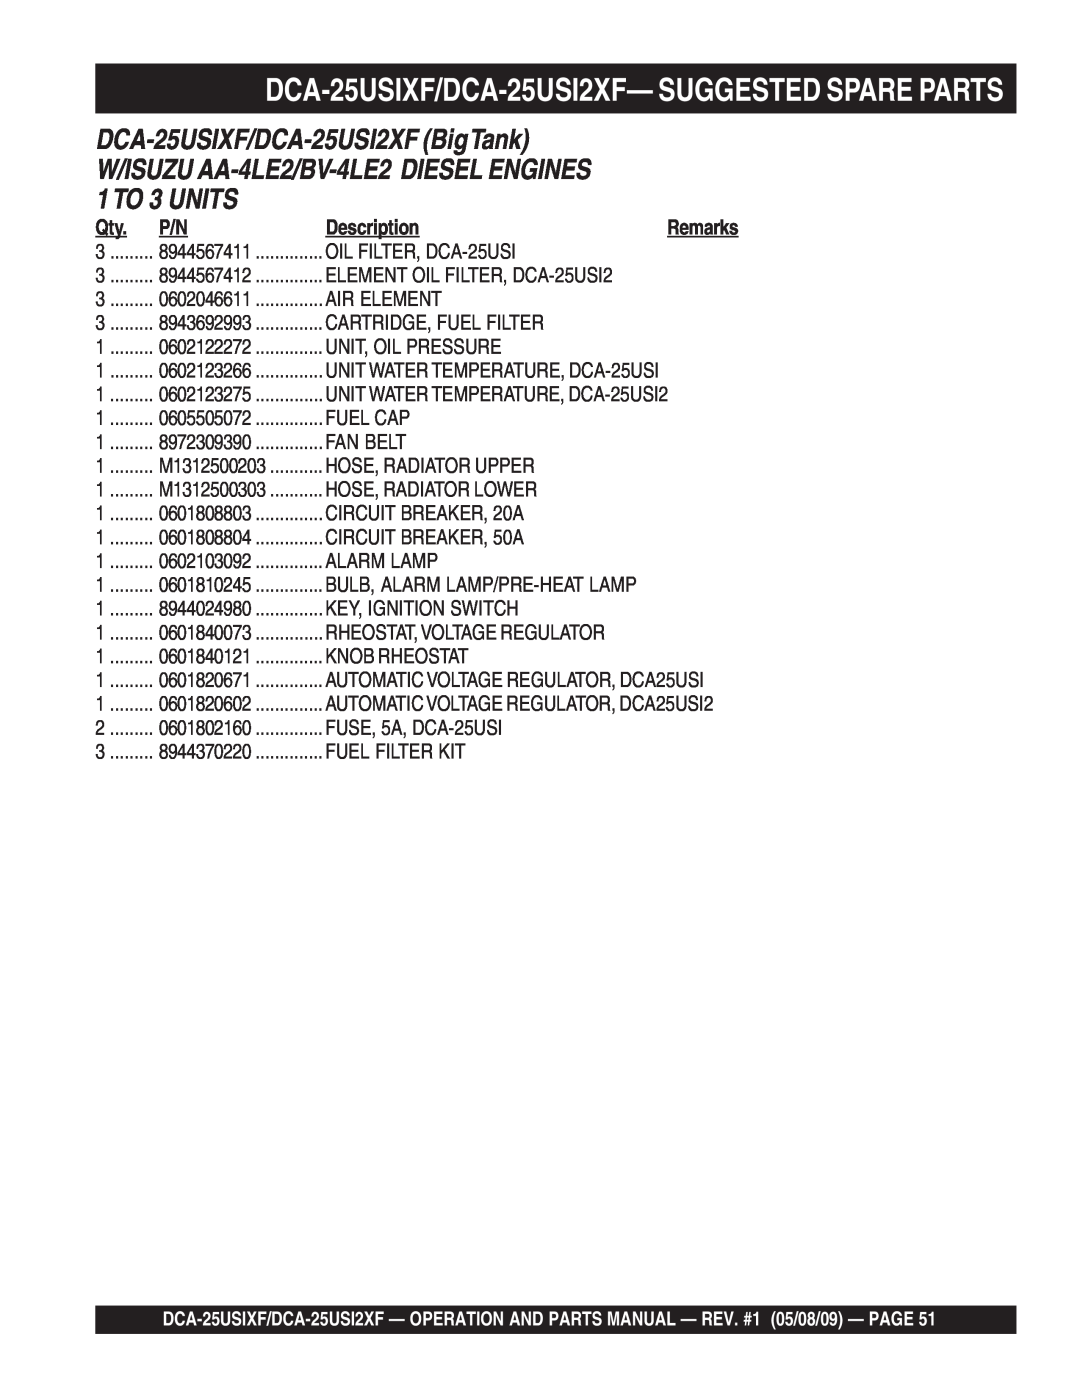 Multiquip operation manual DCA-25USIXF/DCA-25USI2XF- SUGGESTED SPARE PARTS, Description 